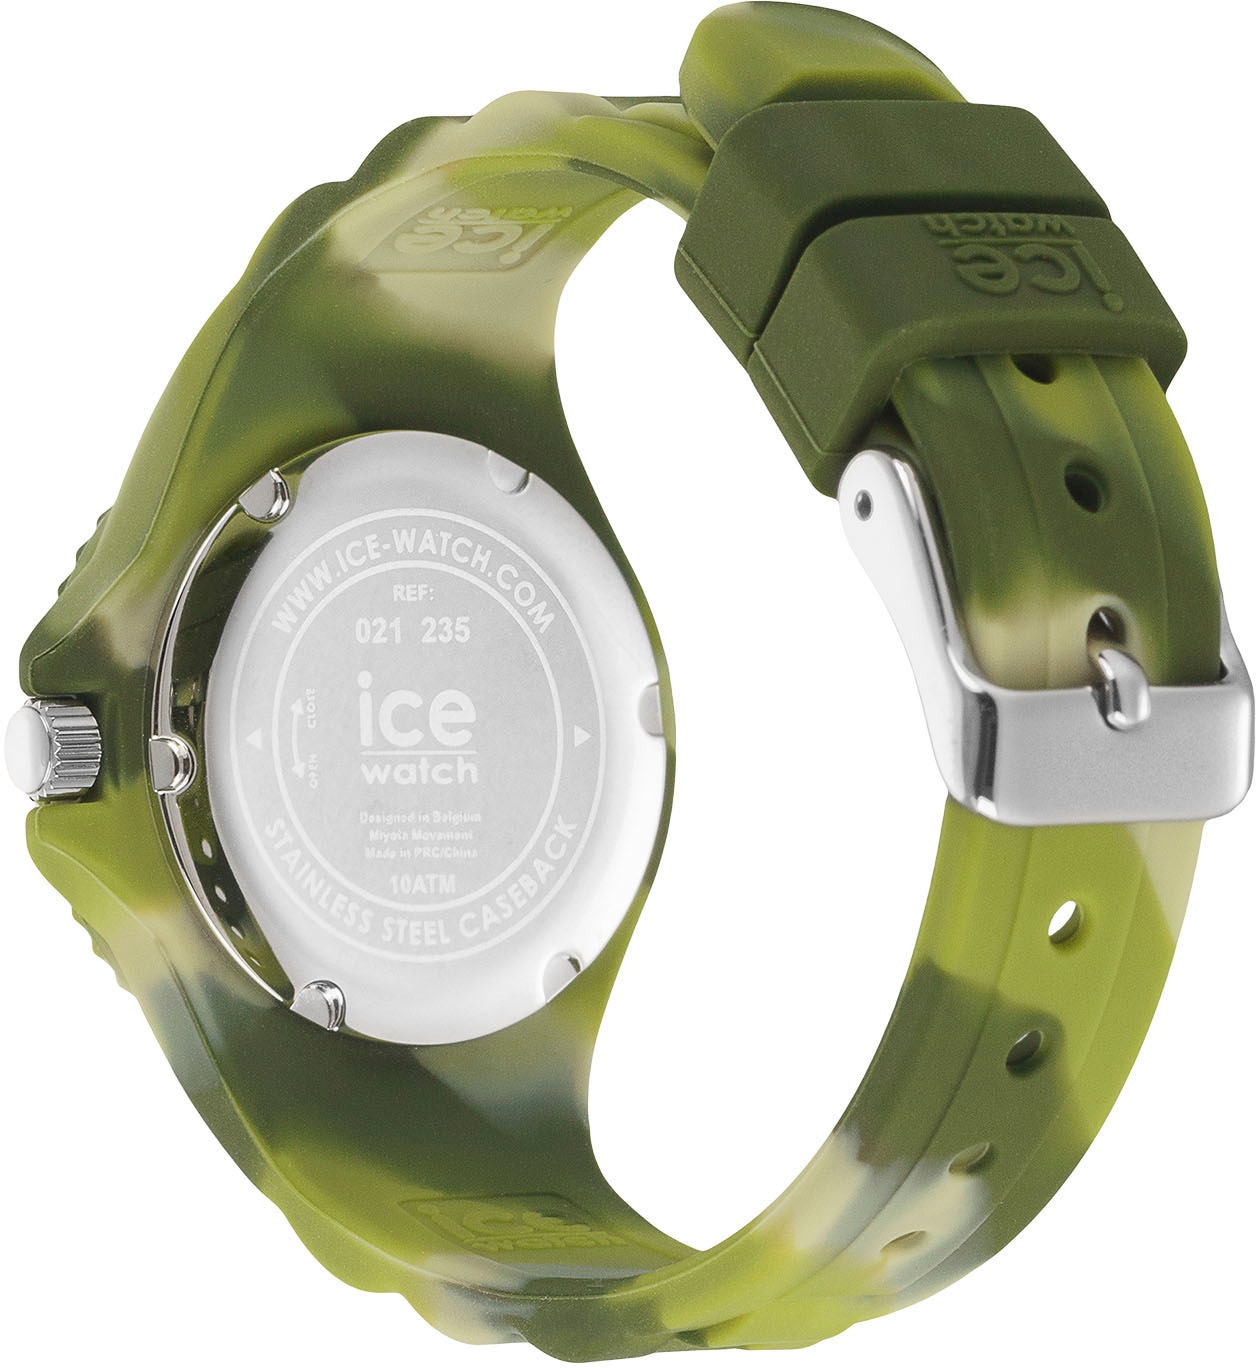 Green ideal als Extra-Small 021235«, shades dye Quarzuhr auch tie ♕ 3H, »ICE - bei - ice-watch - and Geschenk